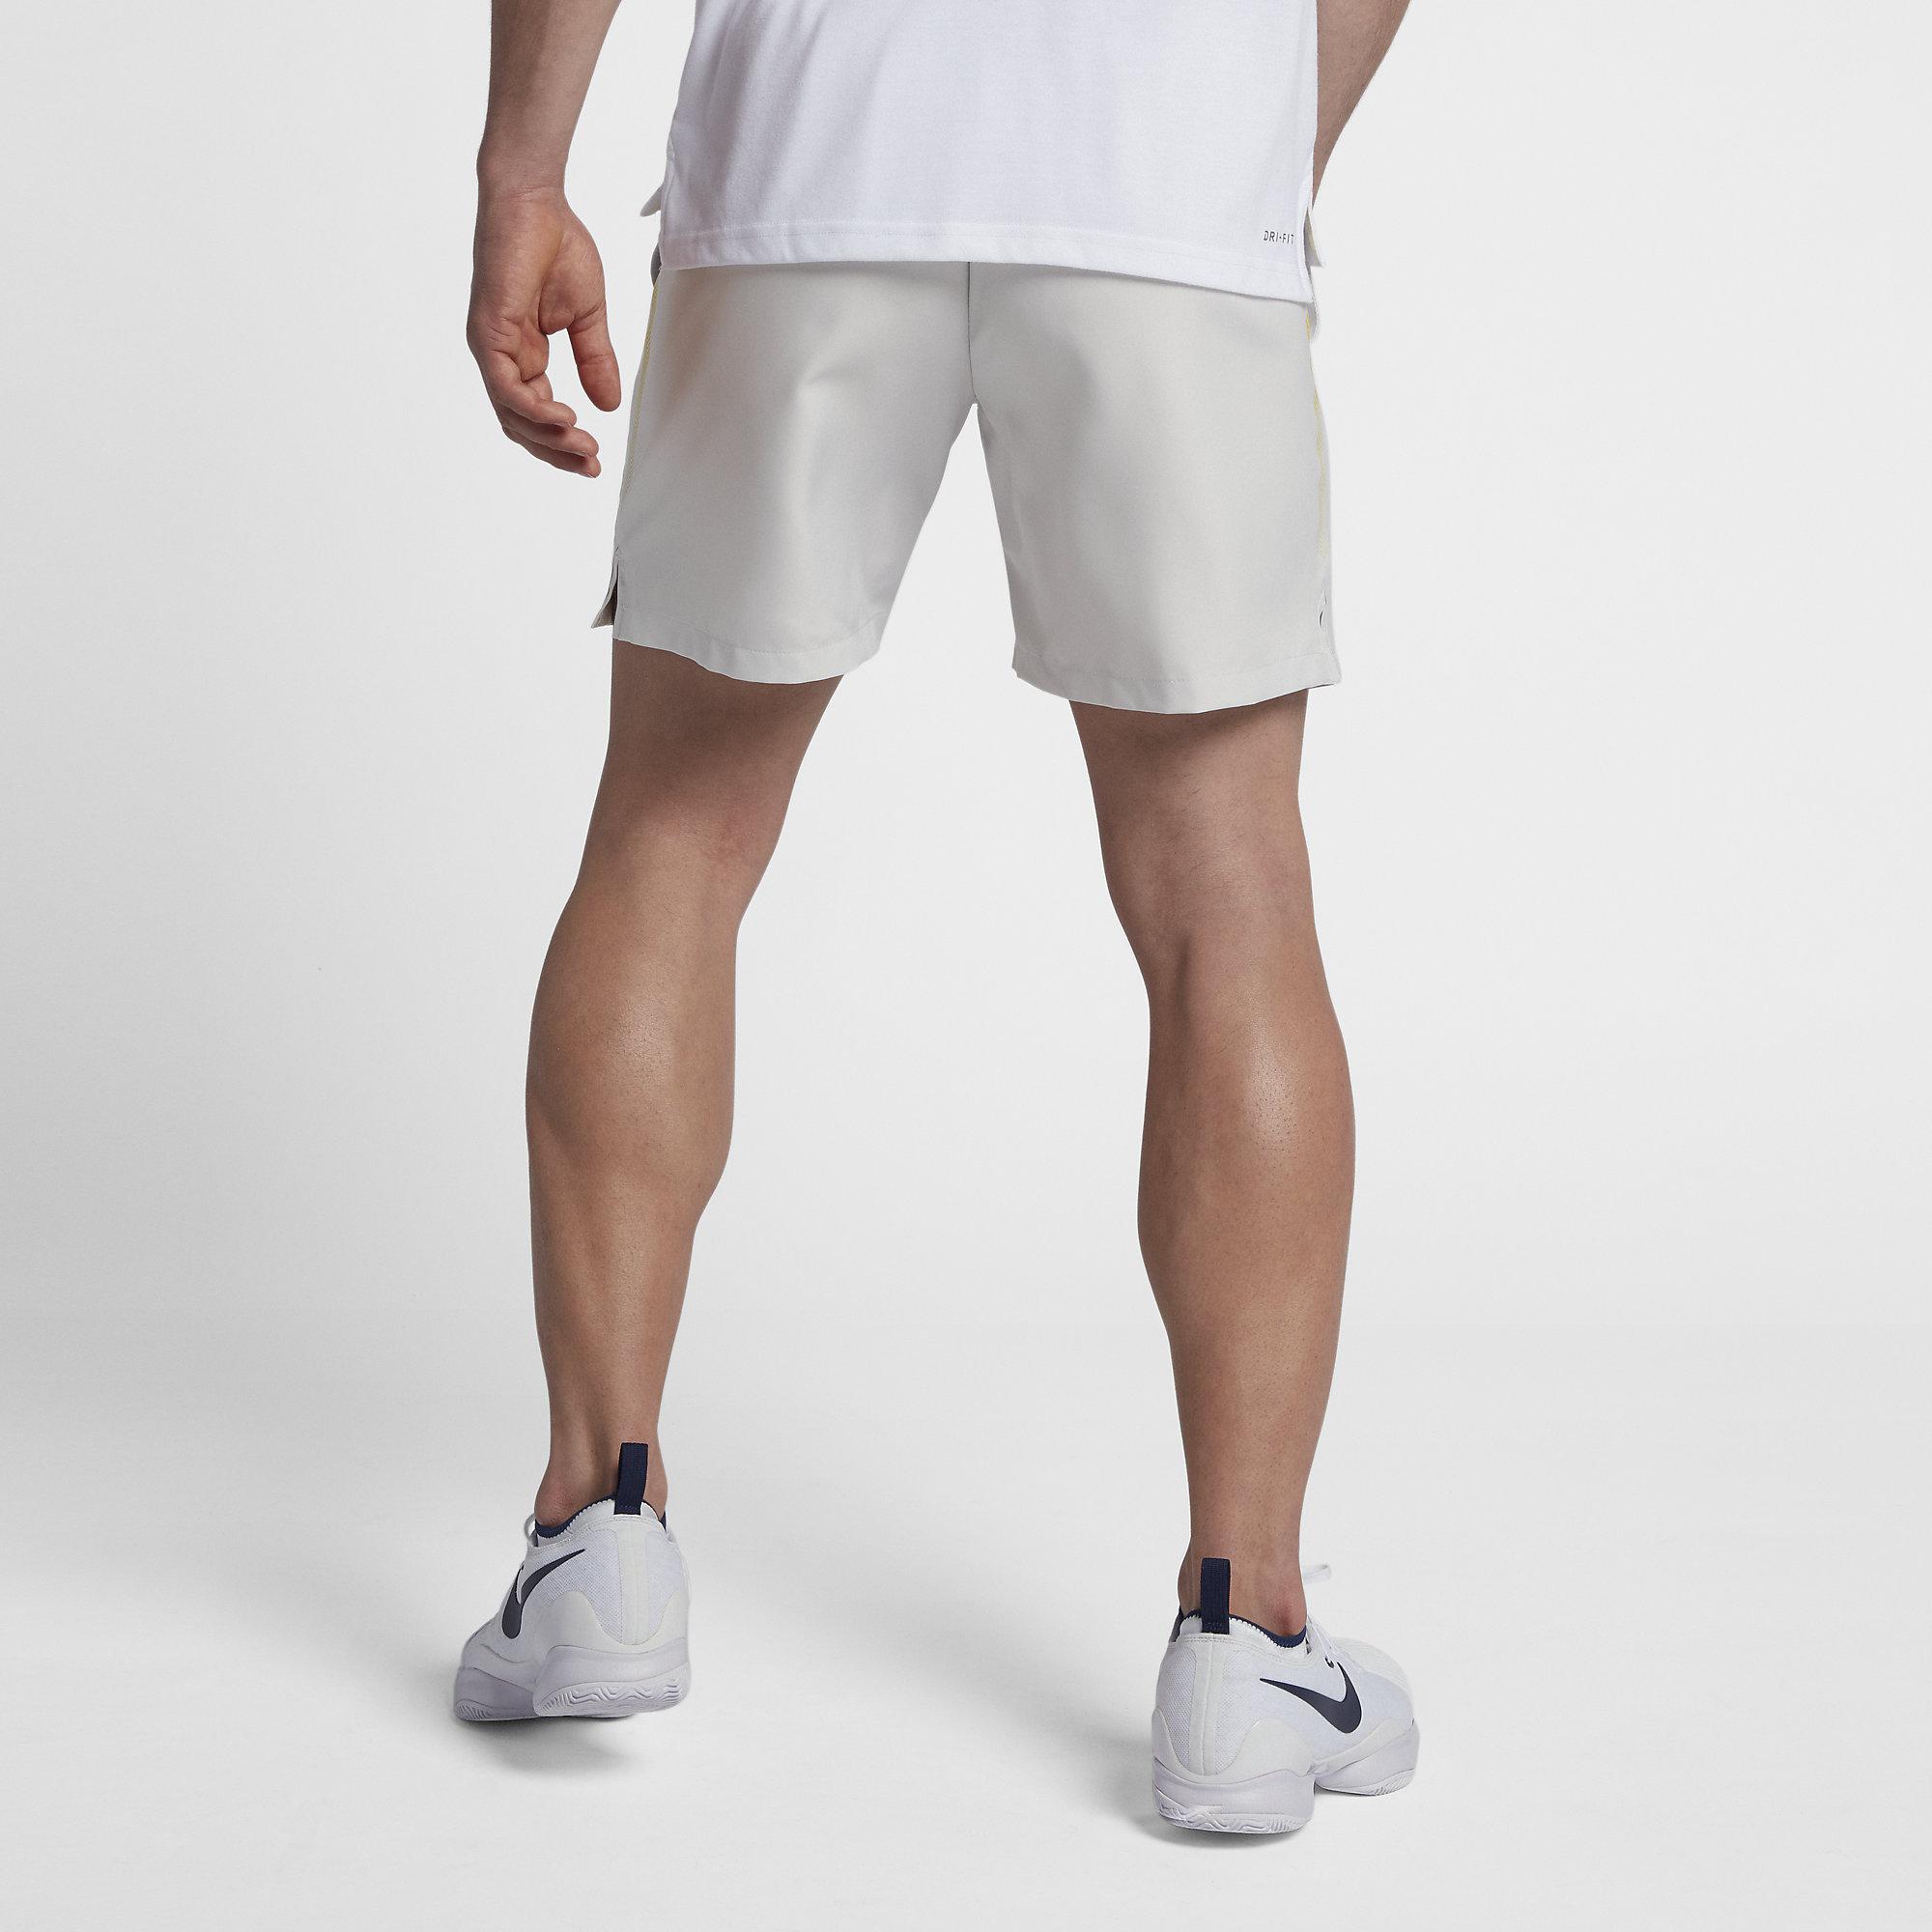 Nike Mens Dry 7 Inch Tennis Shorts - Vast Grey/Bright Citron ...